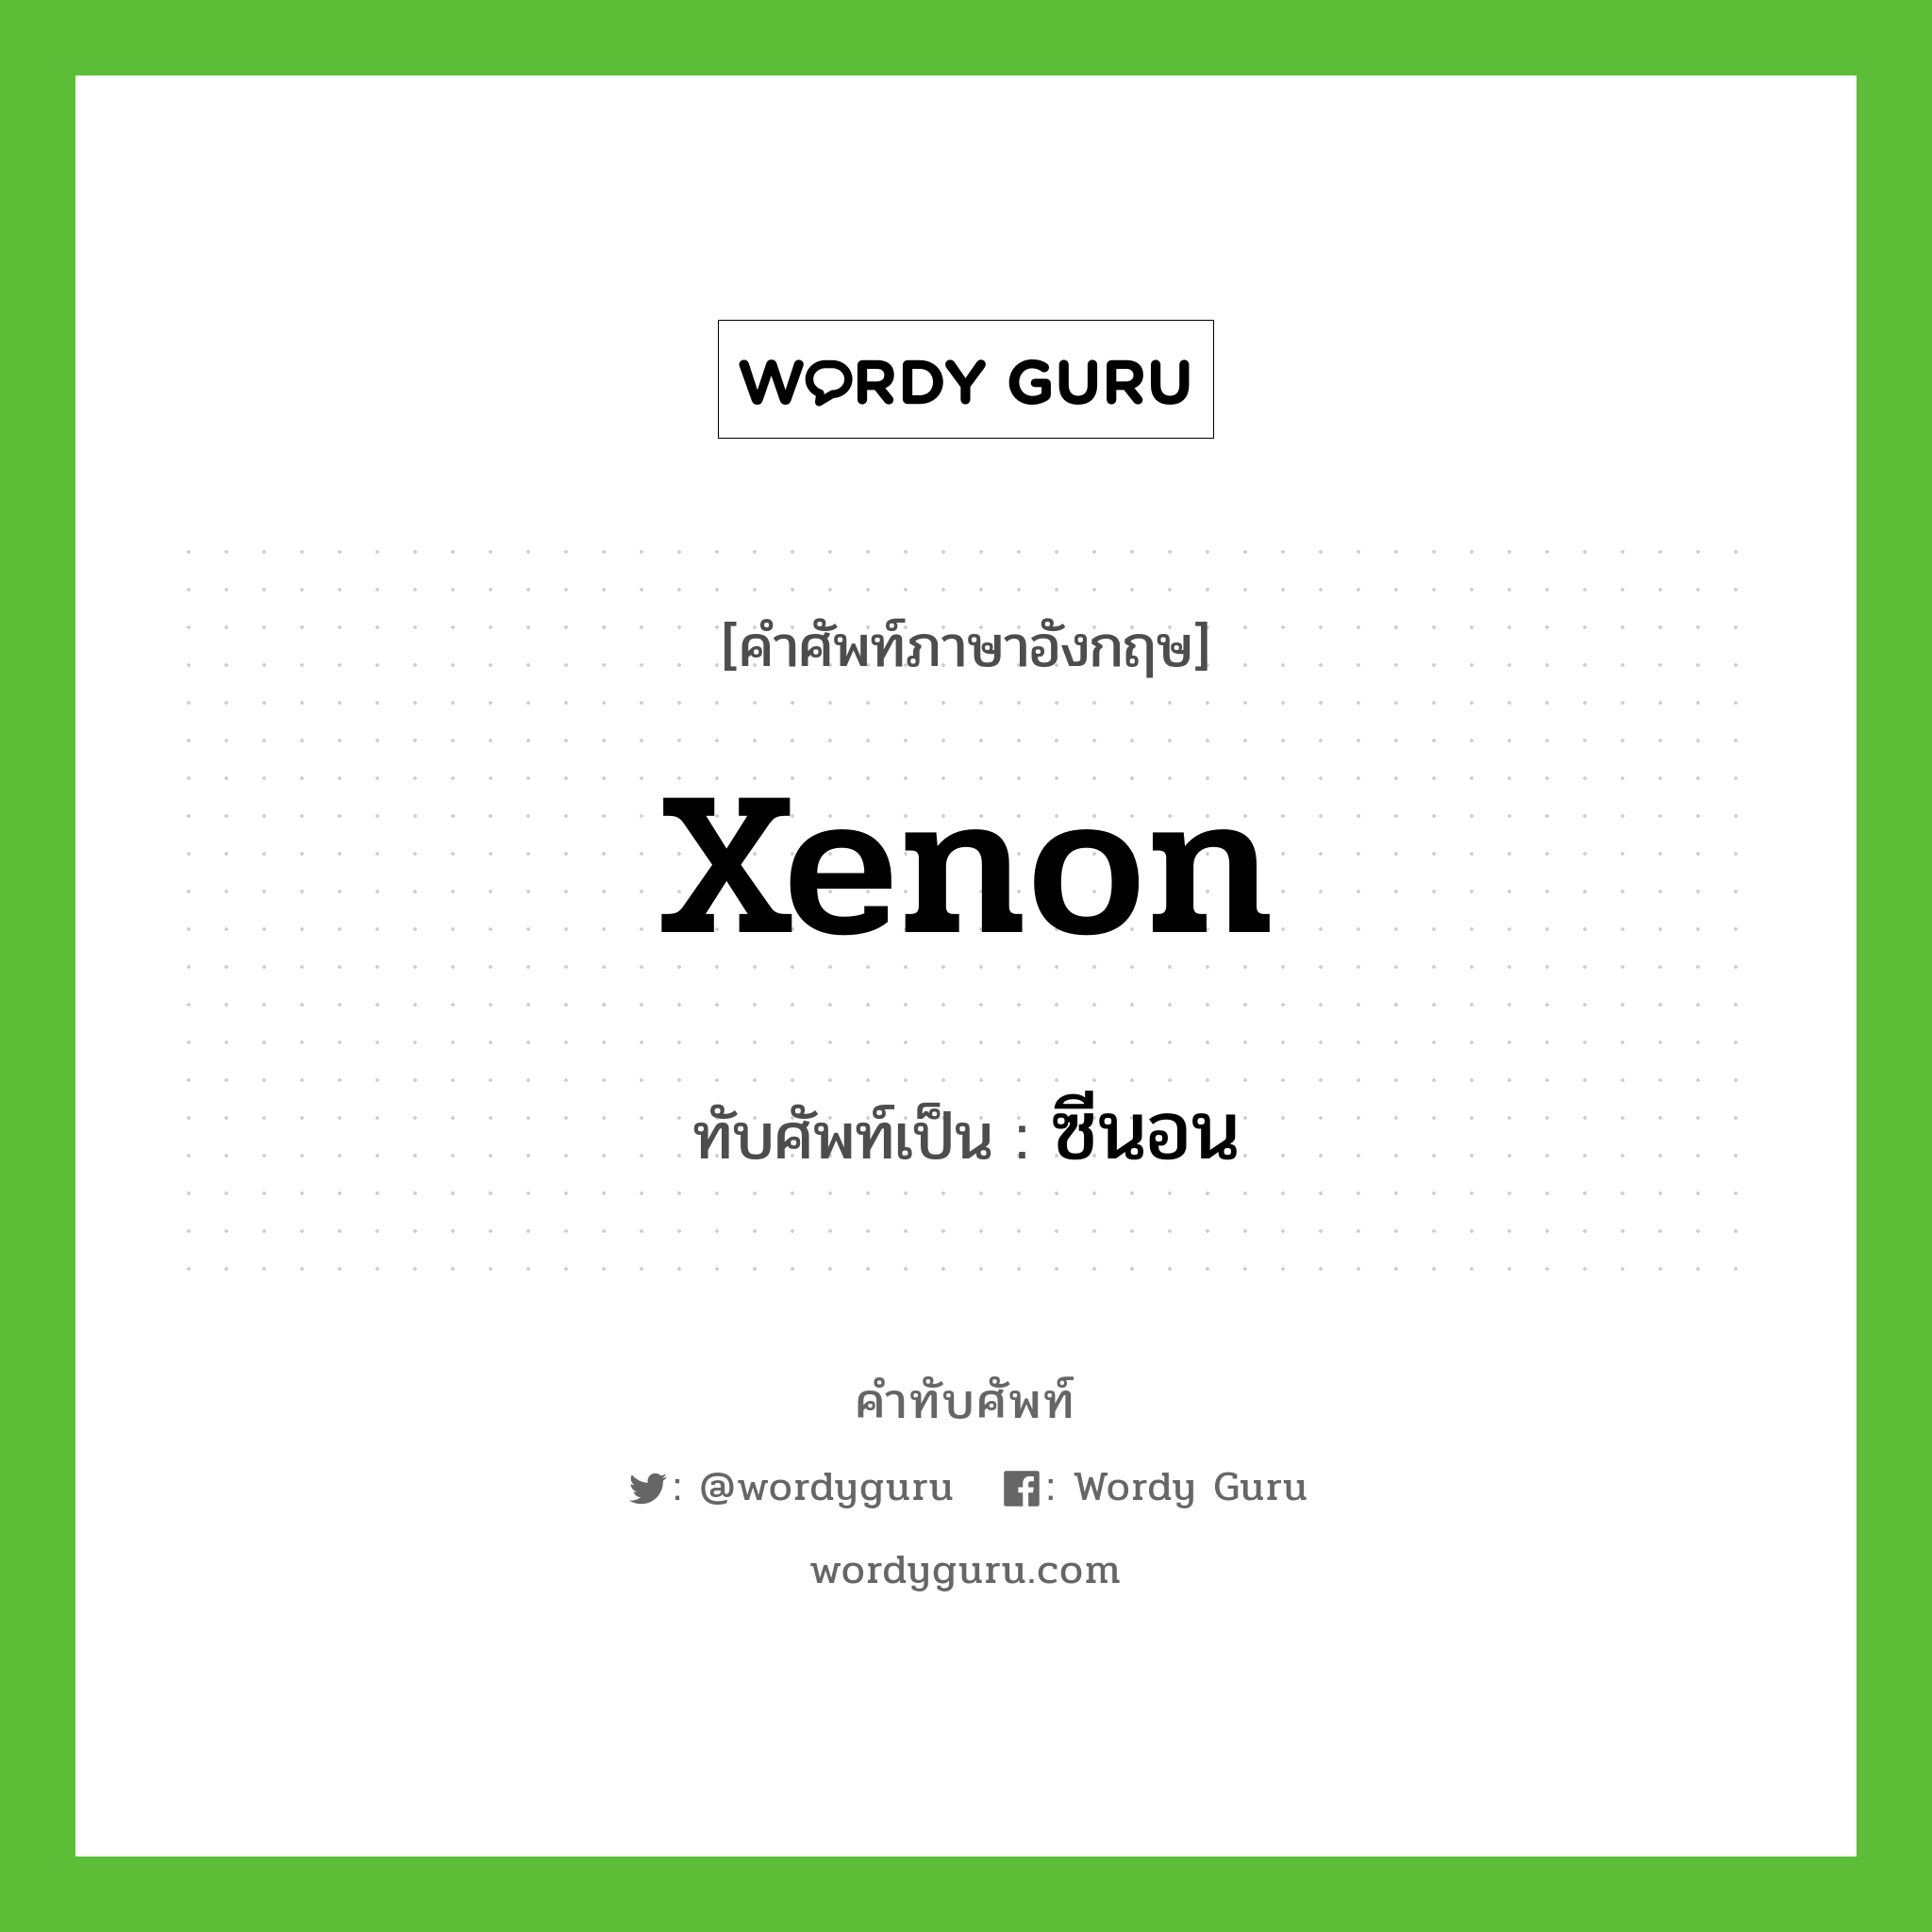 Xenon เขียนเป็นคำไทยว่าอะไร?, คำศัพท์ภาษาอังกฤษ Xenon ทับศัพท์เป็น ซีนอน